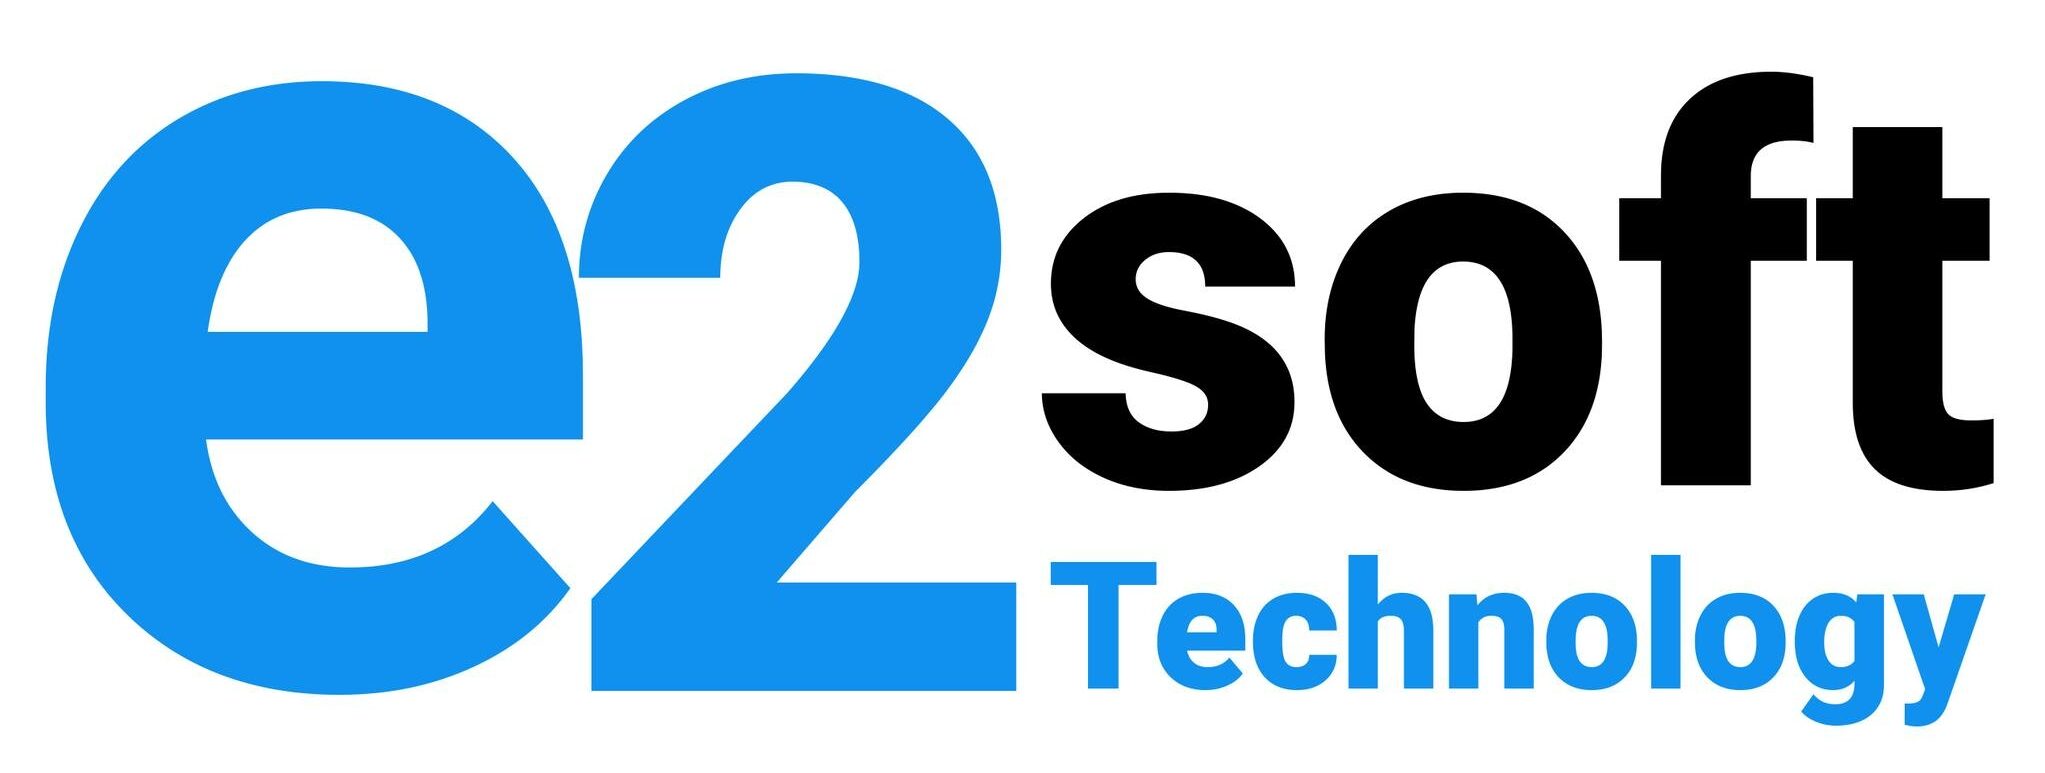 e2soft Technology